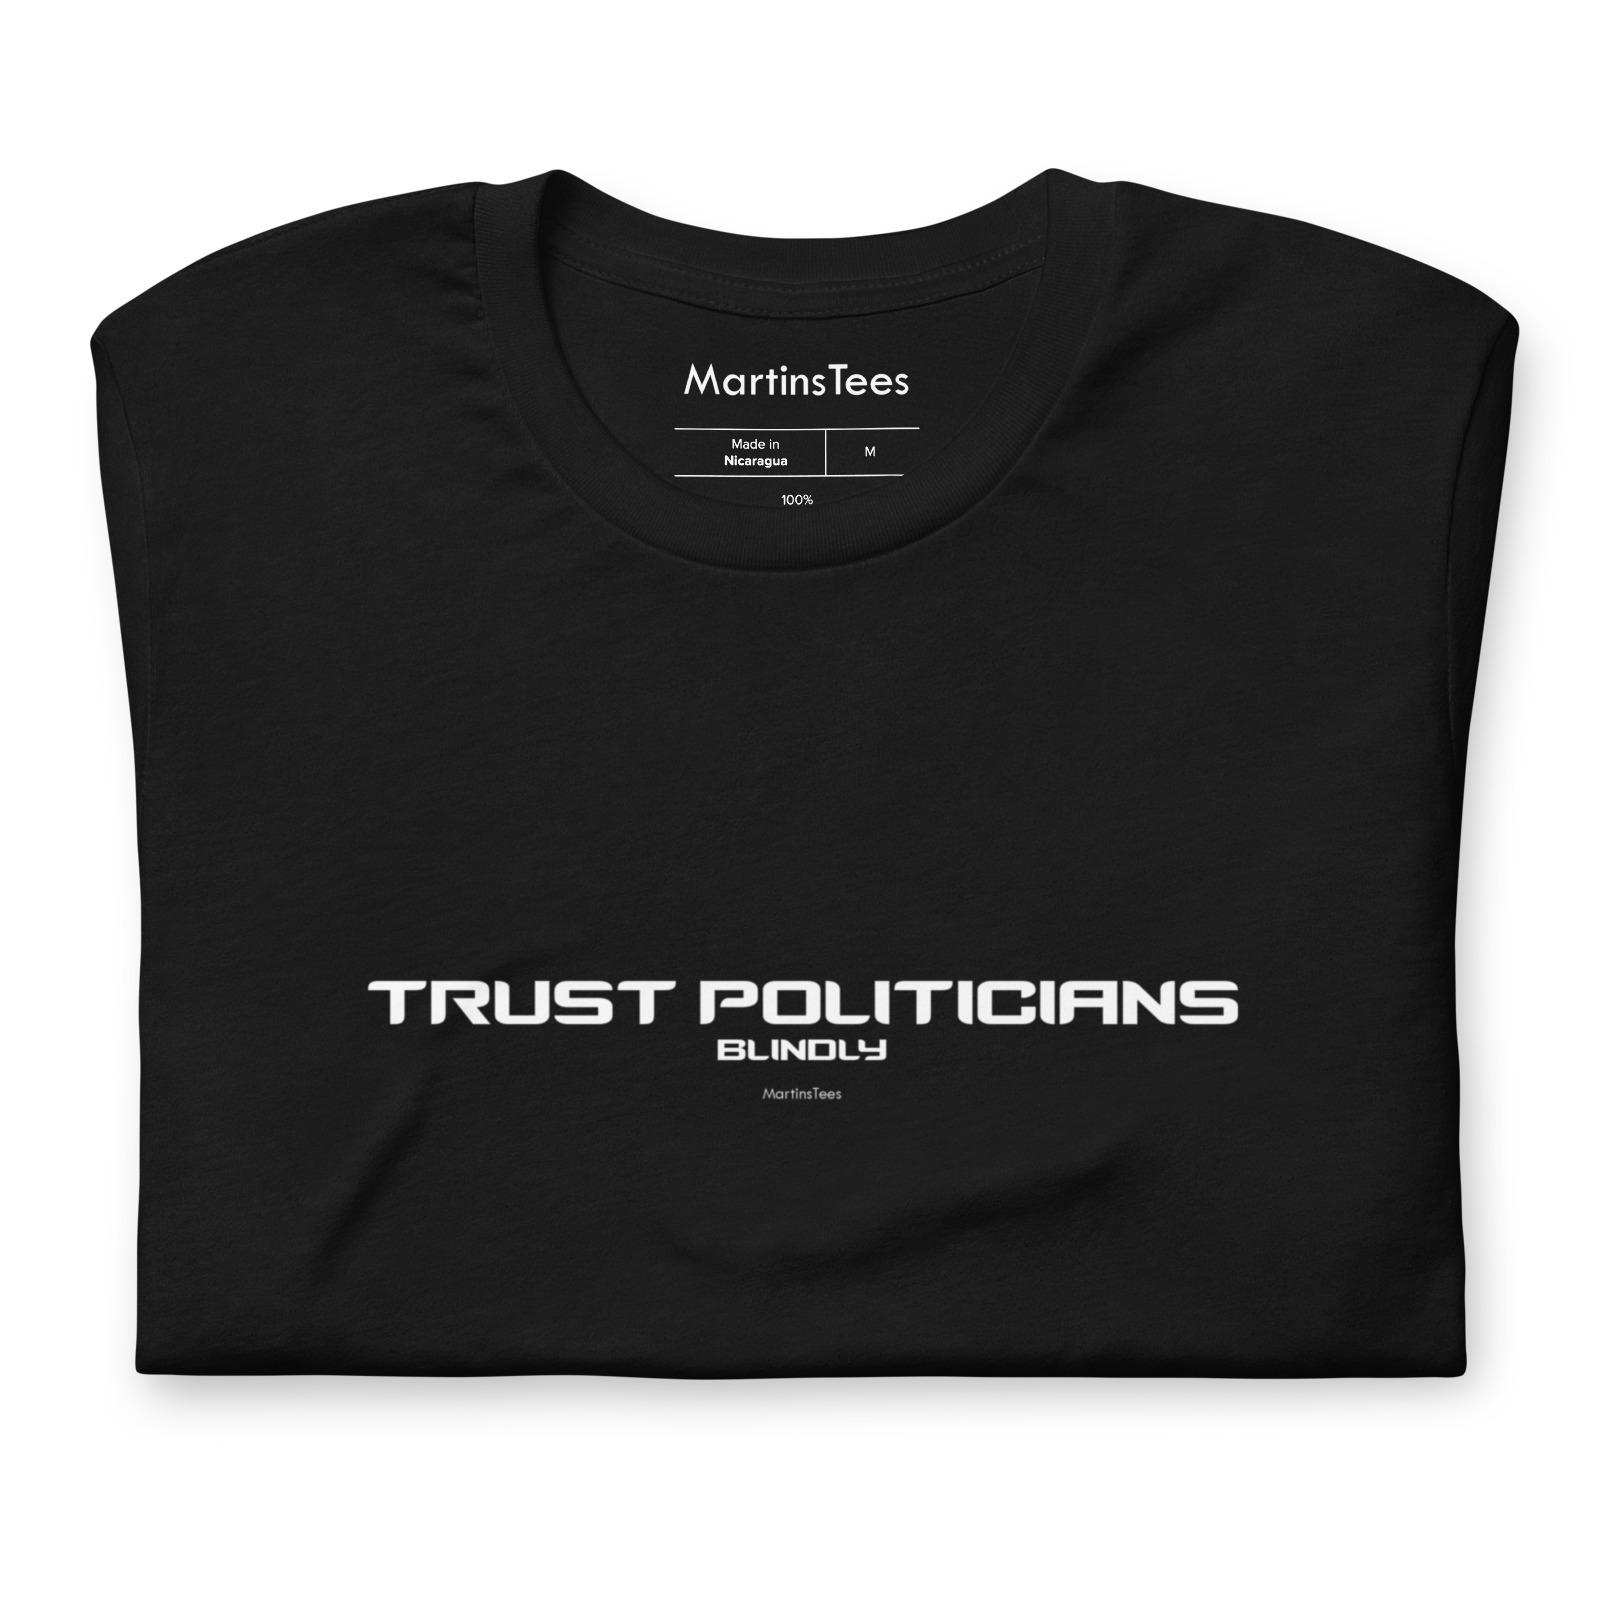 T-shirt: TRUST POLITICIANS - BLINDLY